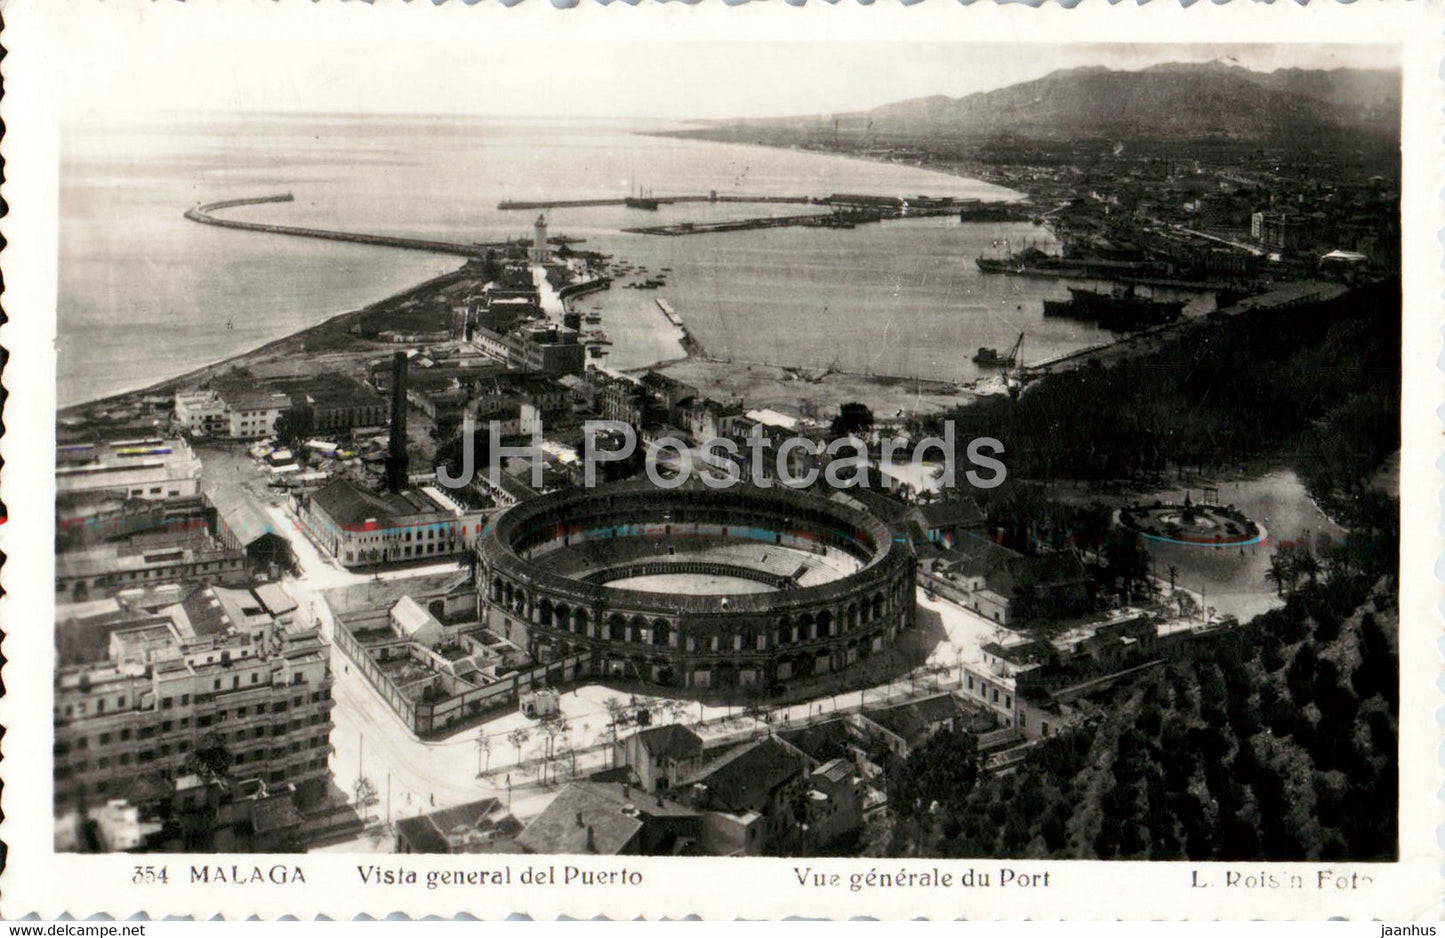 Malaga - Vista general del Puerto - Vue generale du Port - 354 - old postcard - Spain - used - JH Postcards